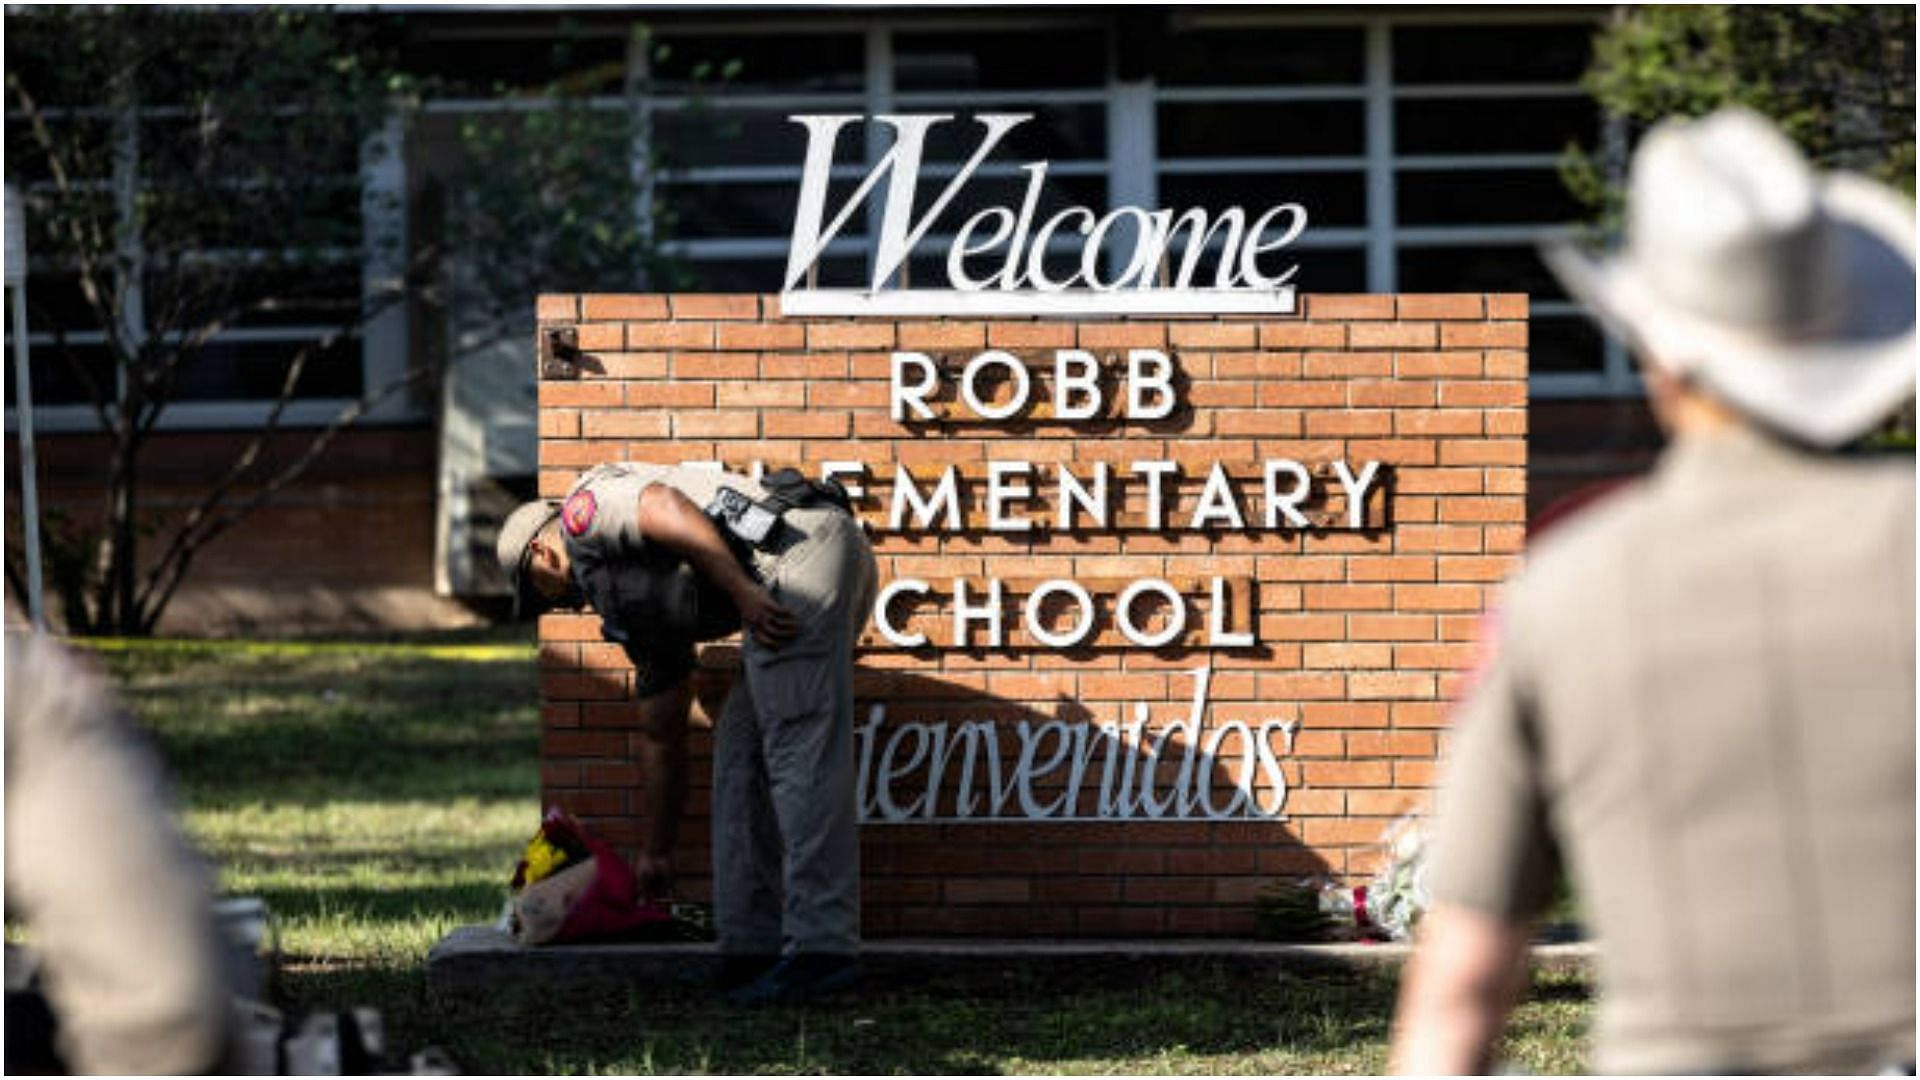 Deadliest school shootings since Sandy Hook Elementary (Image via Getty)